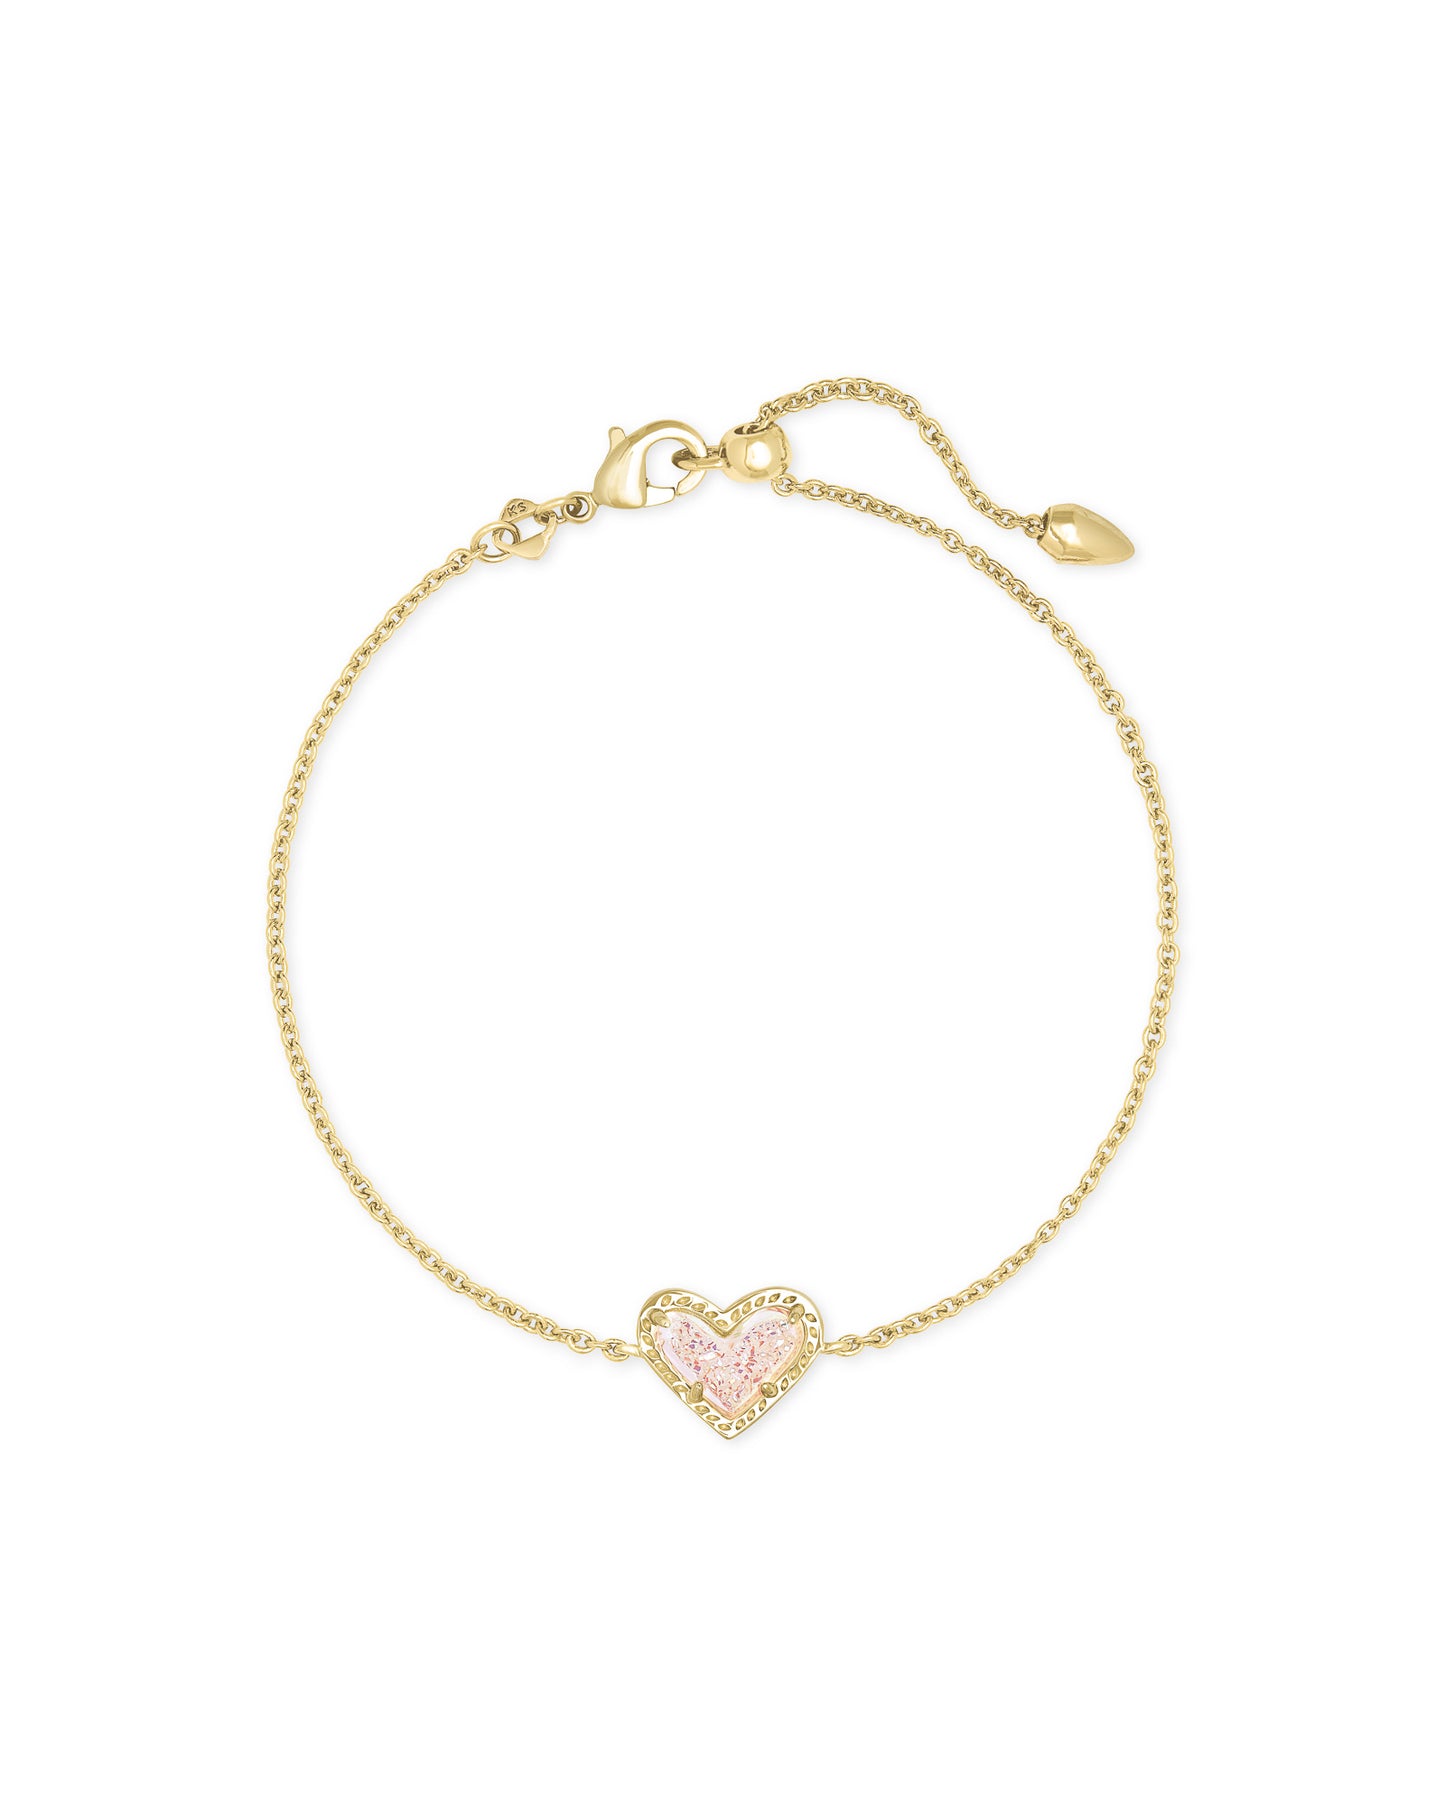 Kendra Scott Ari Heart Delicate Chain Bracelet - Gold Iridescent Drusy